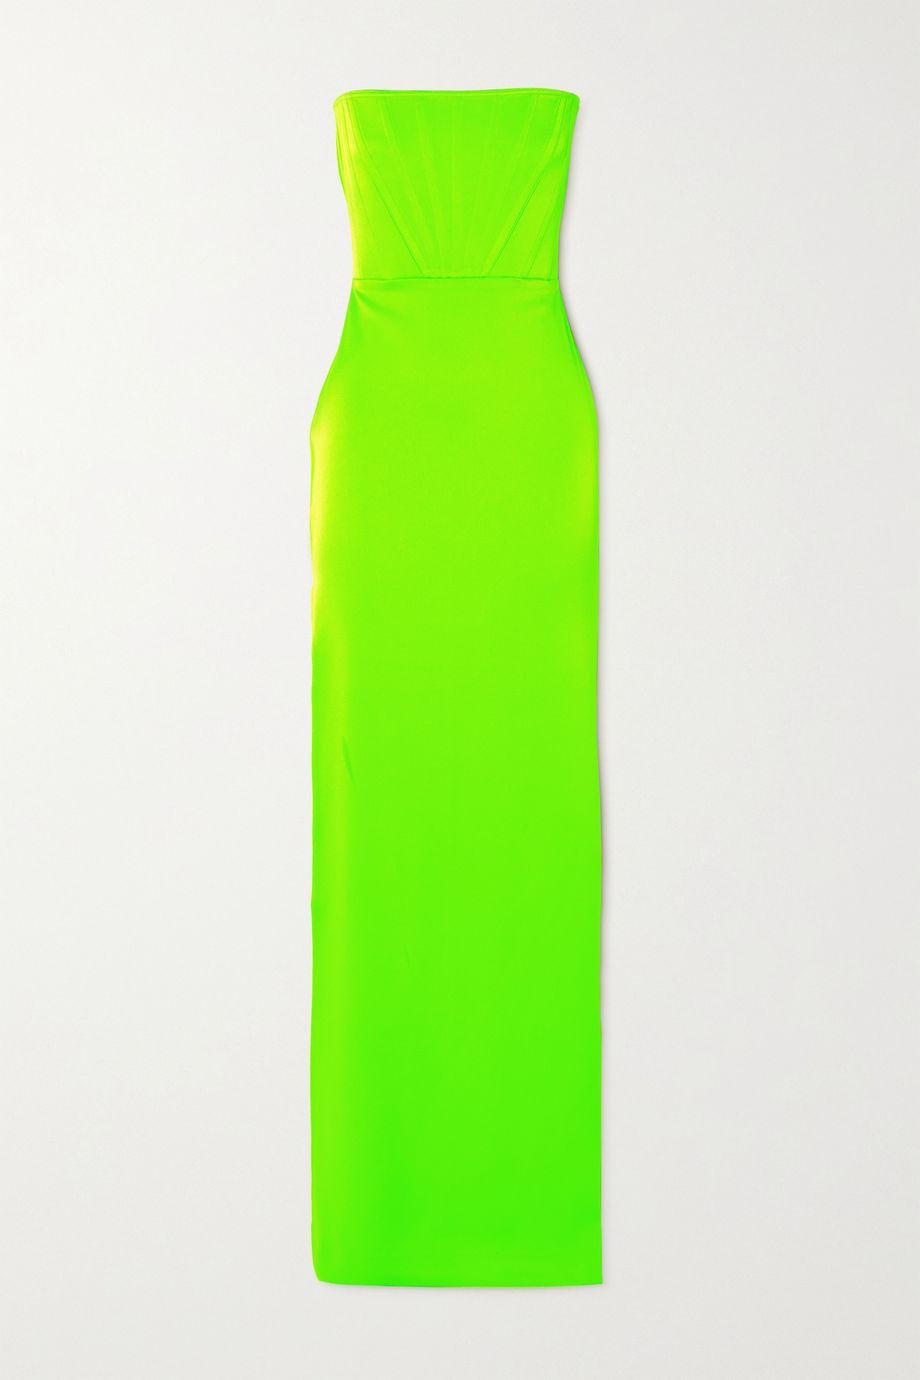 Benton strapless neon satin-crepe maxi dress by ALEX PERRY